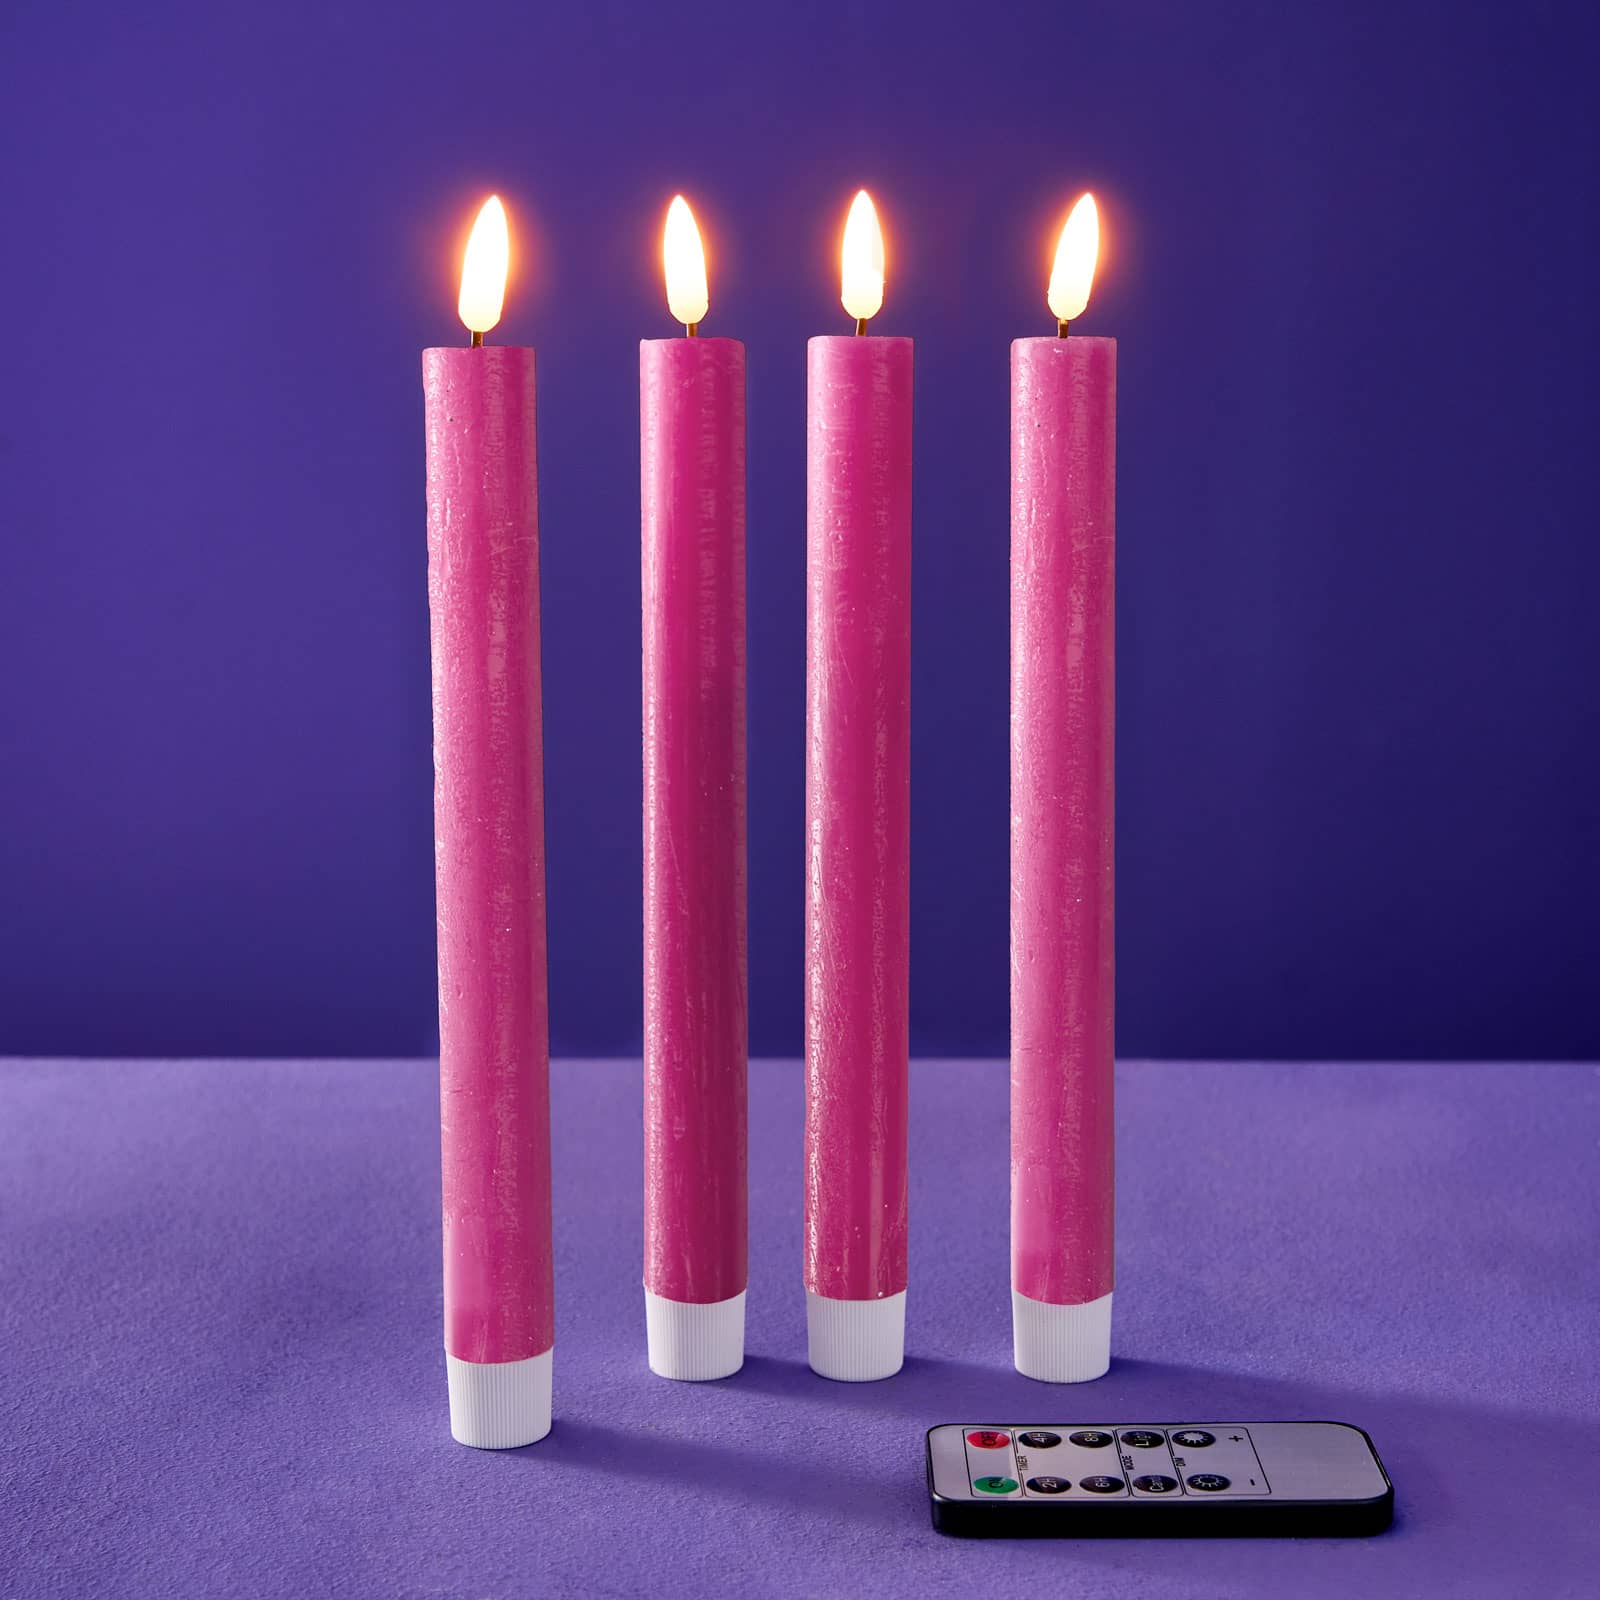 Set of 4 LED stick candles, pink